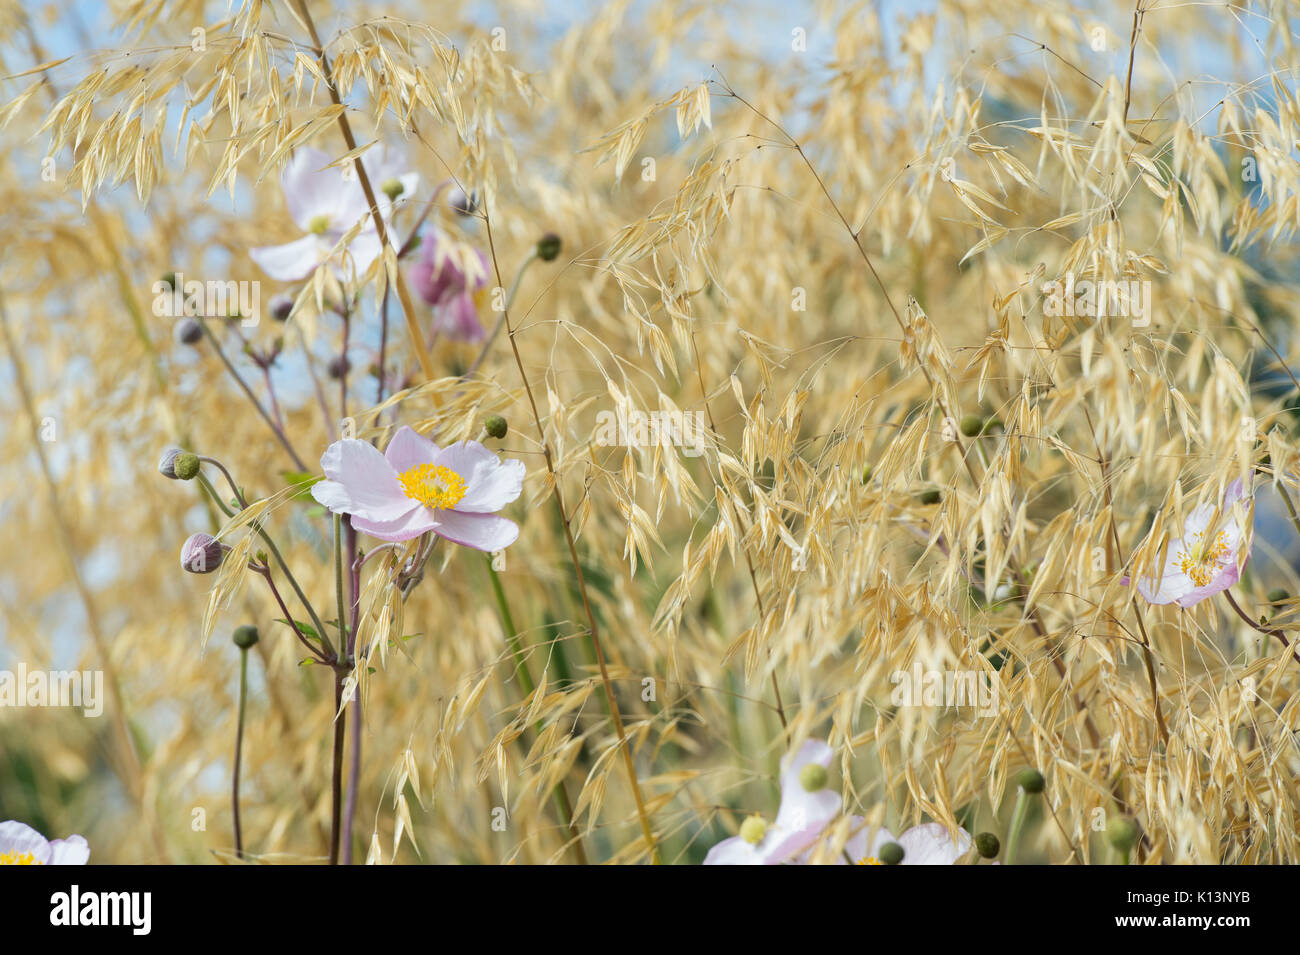 Anemone x hybrida Elegans. Japanese anemone 'Elegans' flowers amongst Stipa gigantea 'Gold Fontaene' grass. Golden oats. Giant feather grass Stock Photo